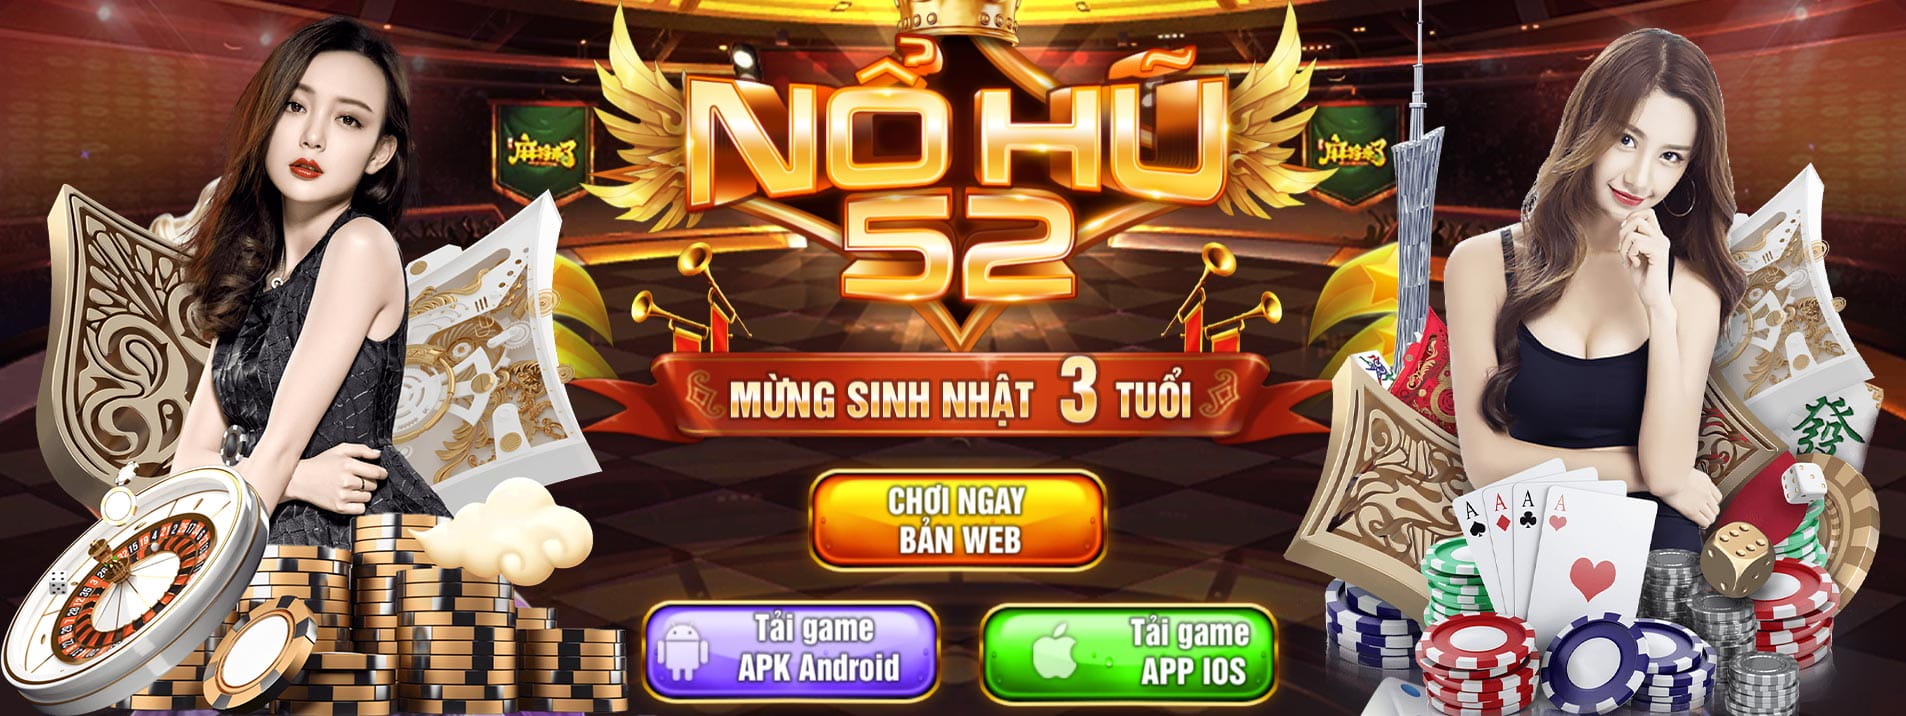 Banner nohu52